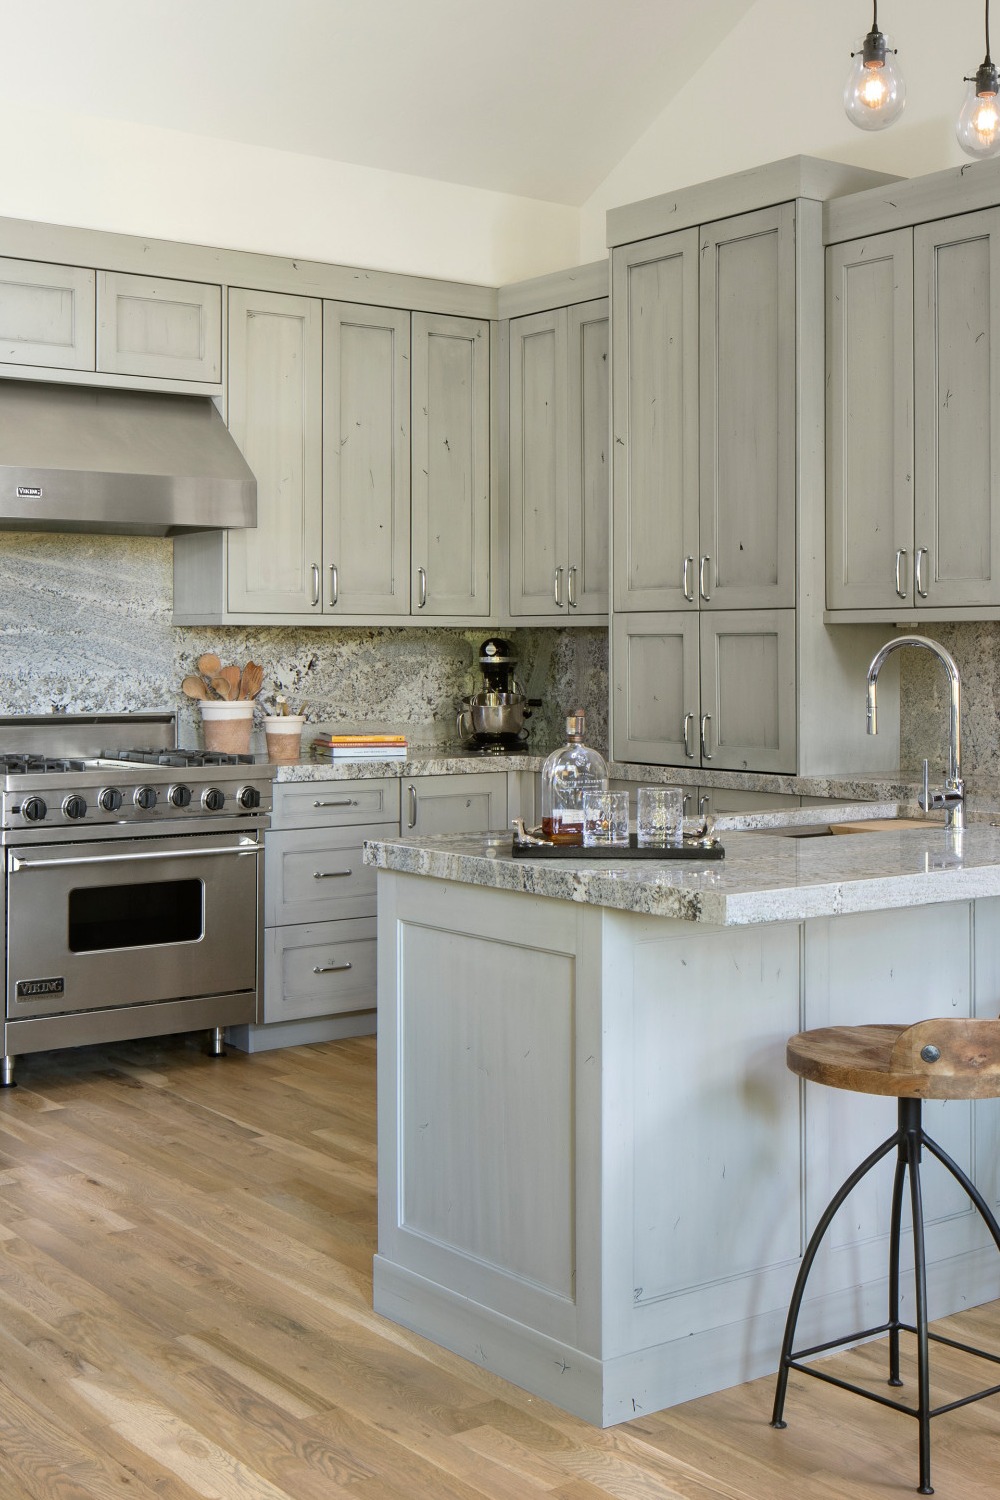 White Cabinets Kitchen Design Full Height Backsplash Rustic Floor